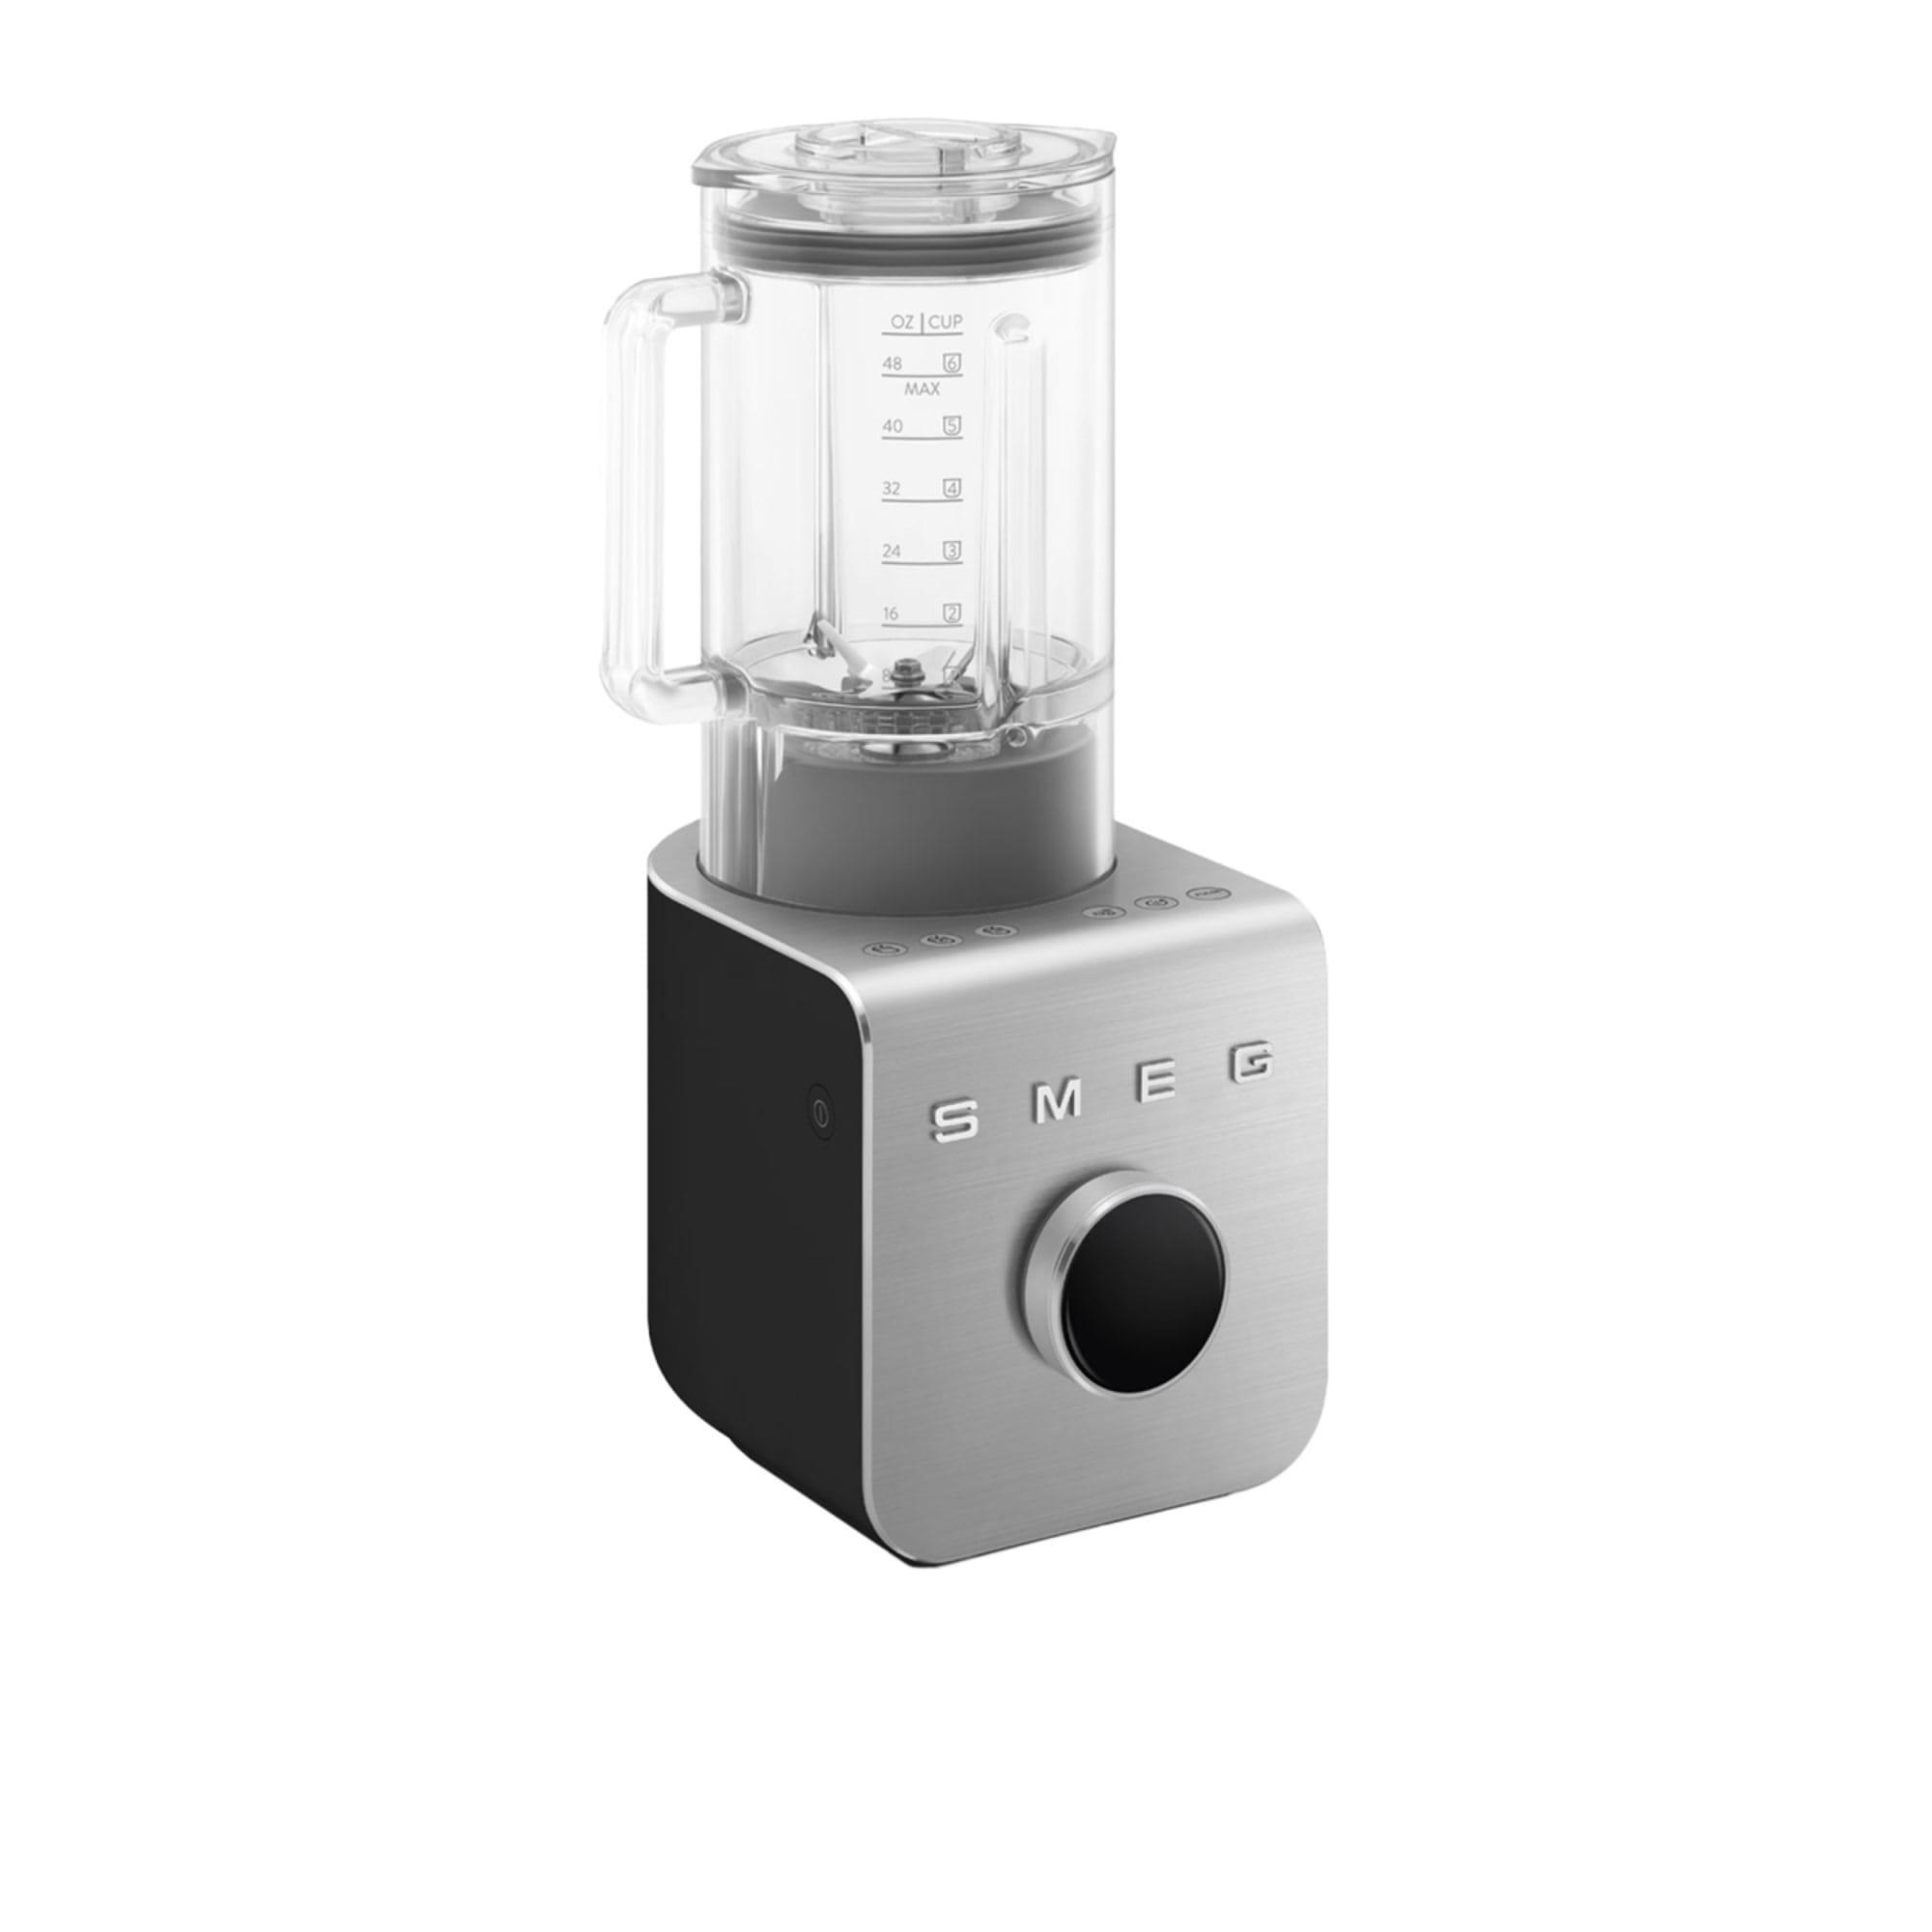 Smeg High Performance Blender with Vacuum Pump 1.5L Matte Black Image 6